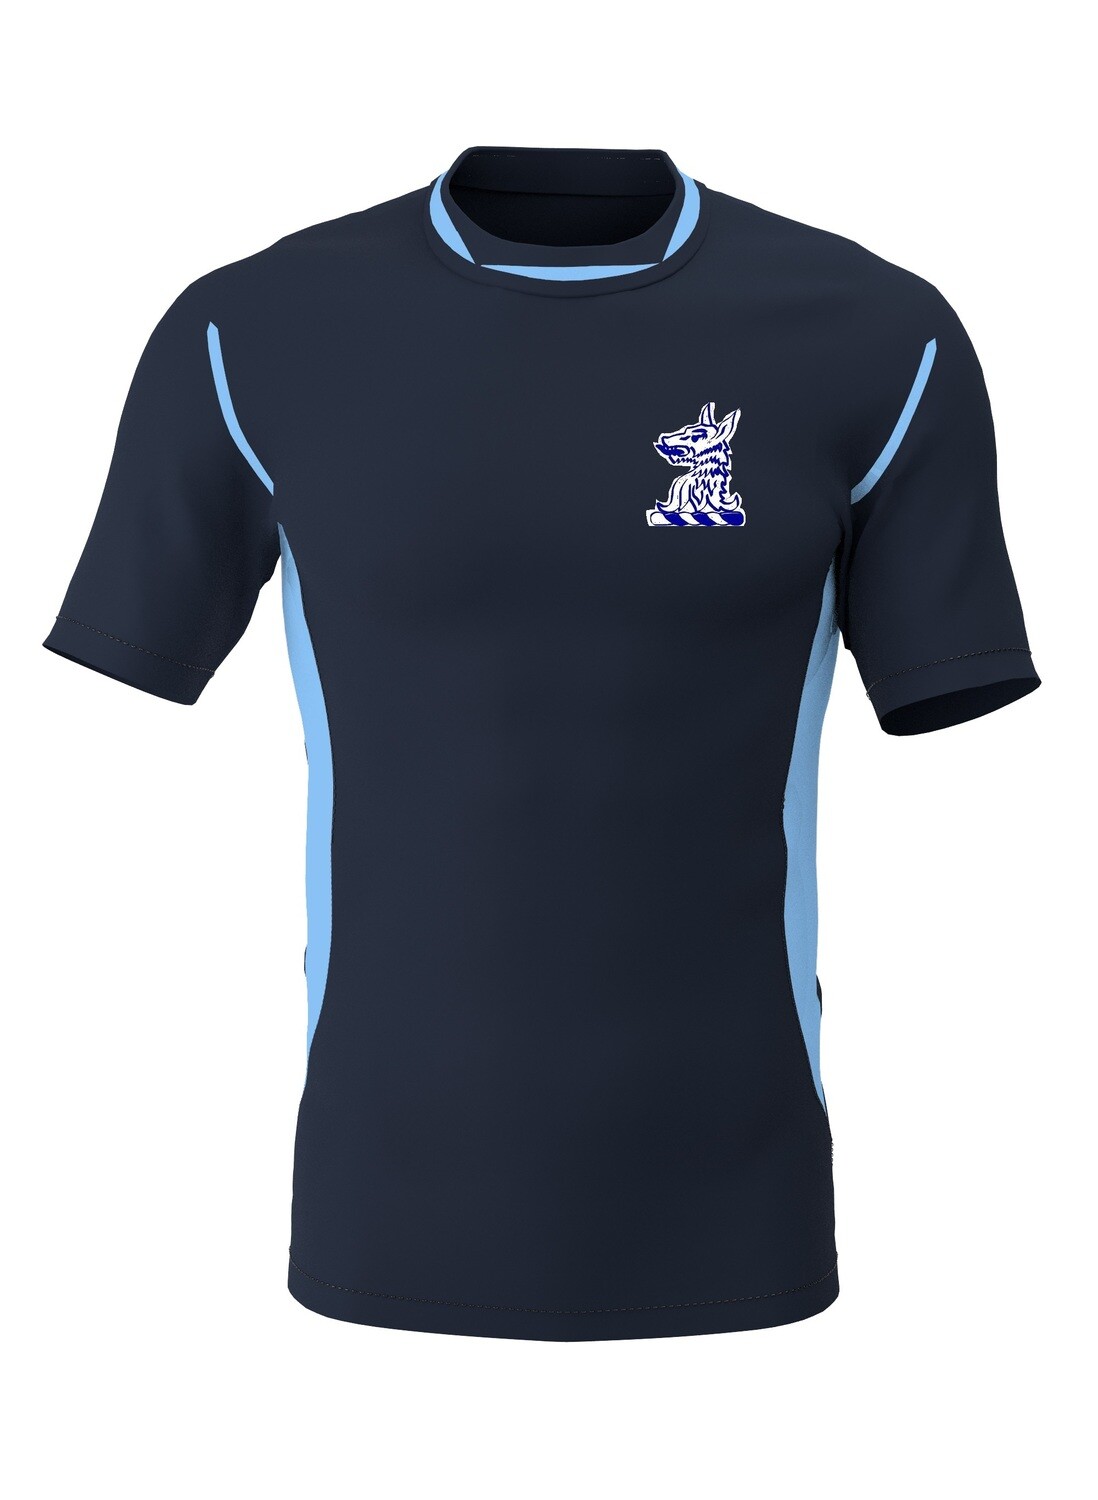 Rode Park & Lawton Navy/Sky Pro Training T Shirt Adult